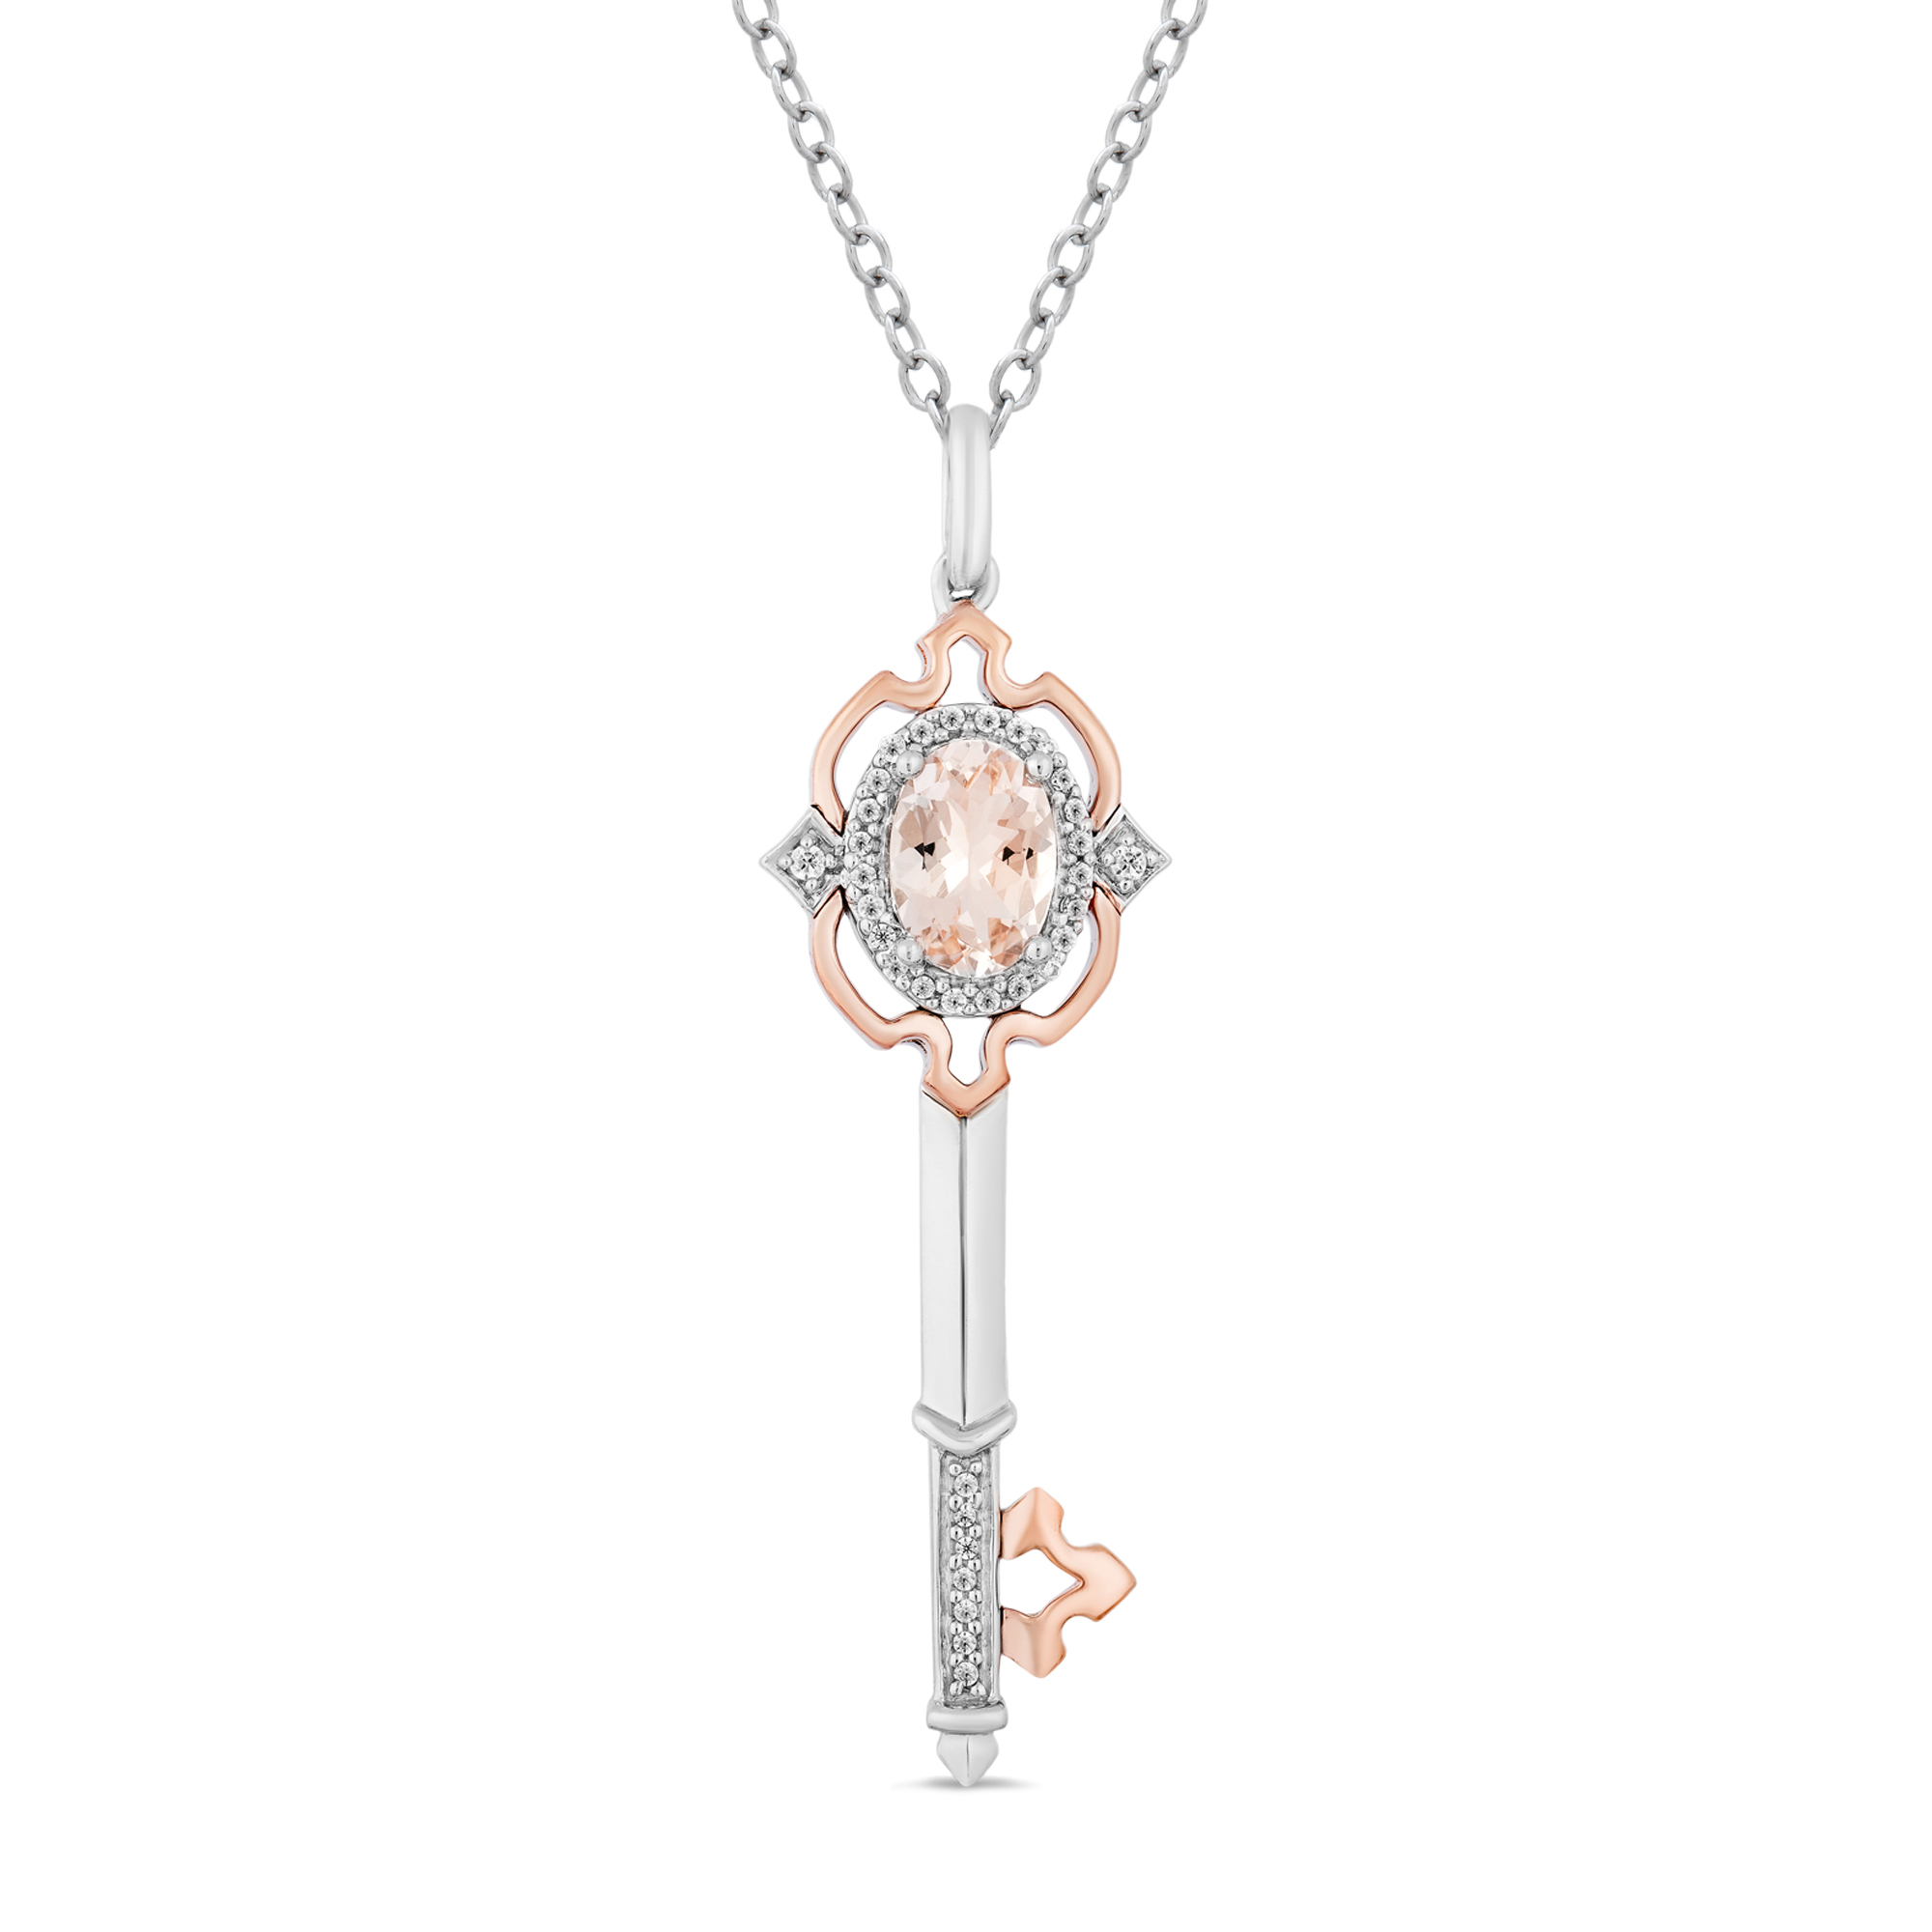 Enchanted Disney Fine Jewelry Diamond Ariel Shell Key Pendant Necklace  (1/10 ct. t.w.) in Sterling Silver & 14k Rose Gold-Plate, 16